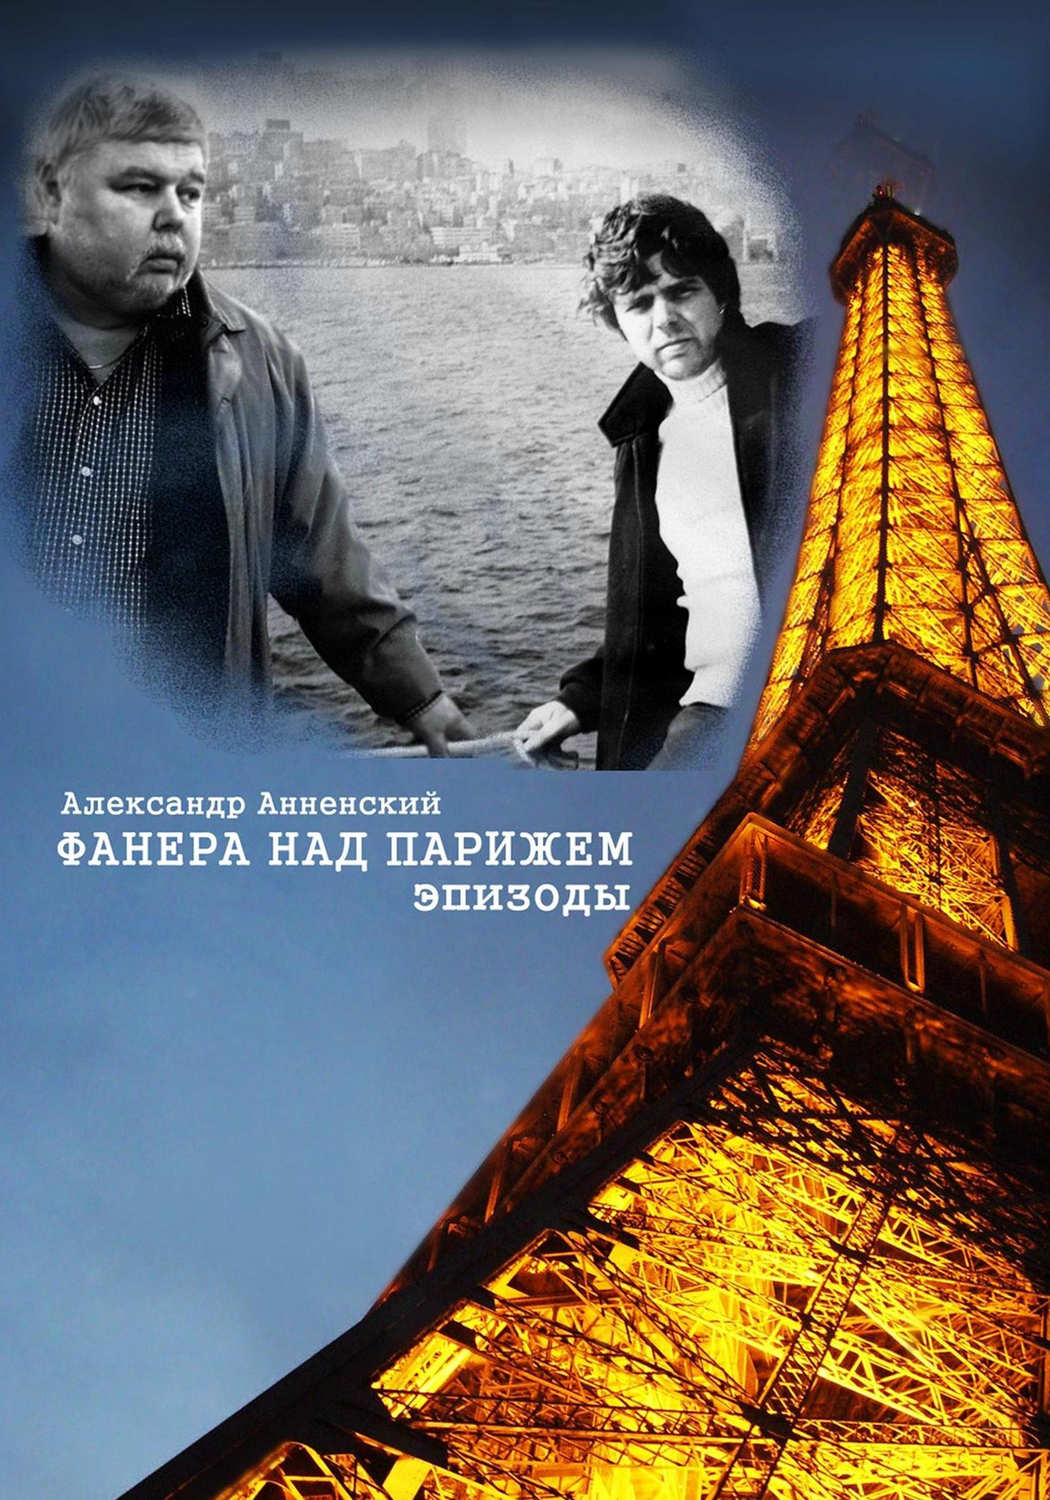 Анненский Александр - «Фанера над Парижем. Эпизоды»